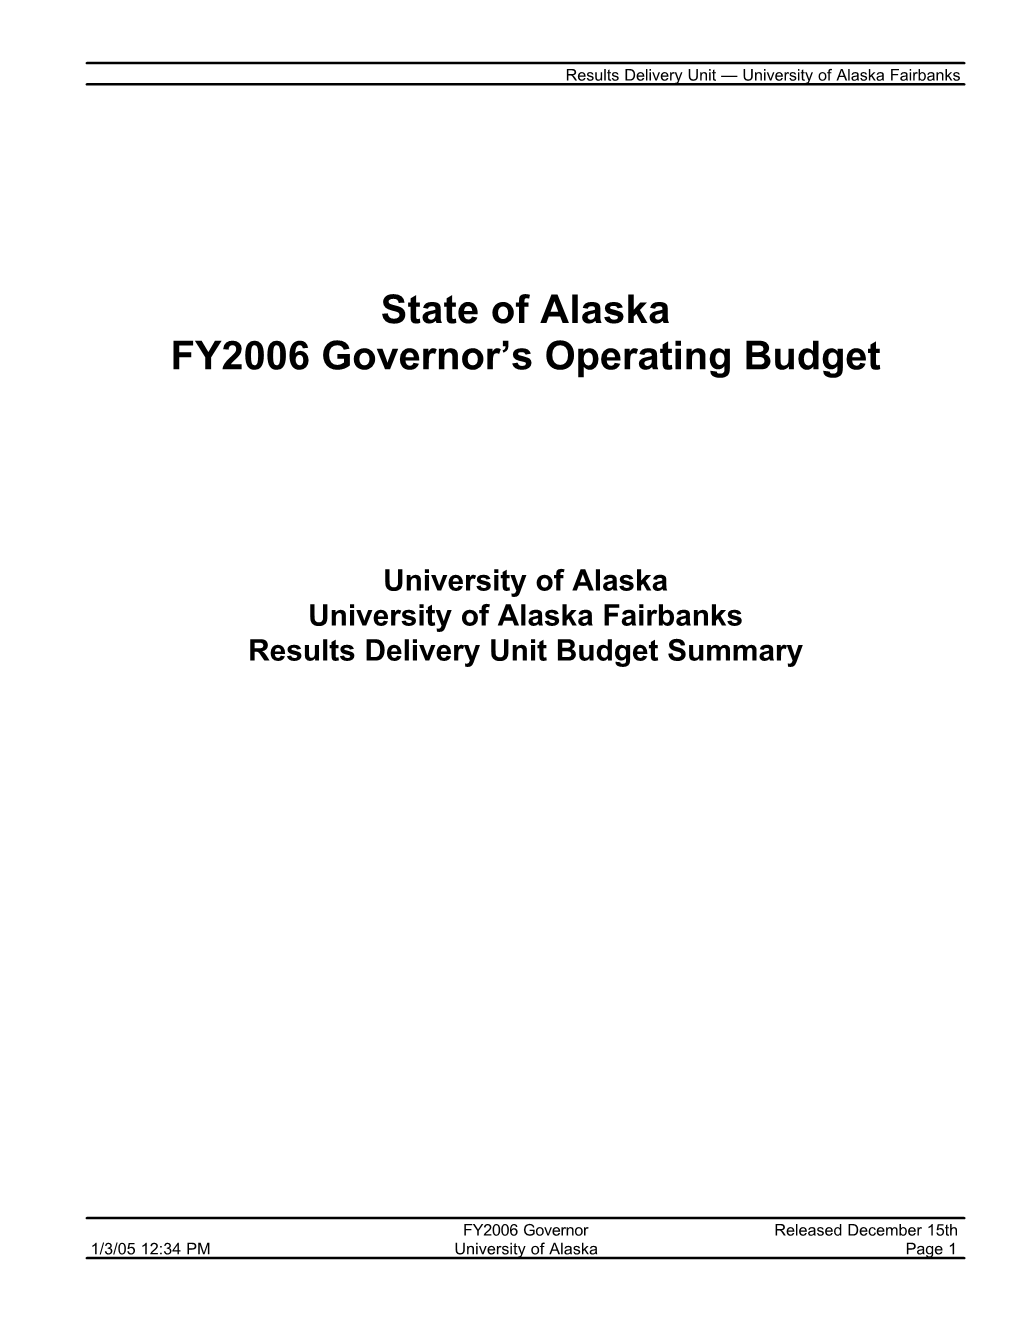 State of Alaska FY2006 Governor's Operating Budget